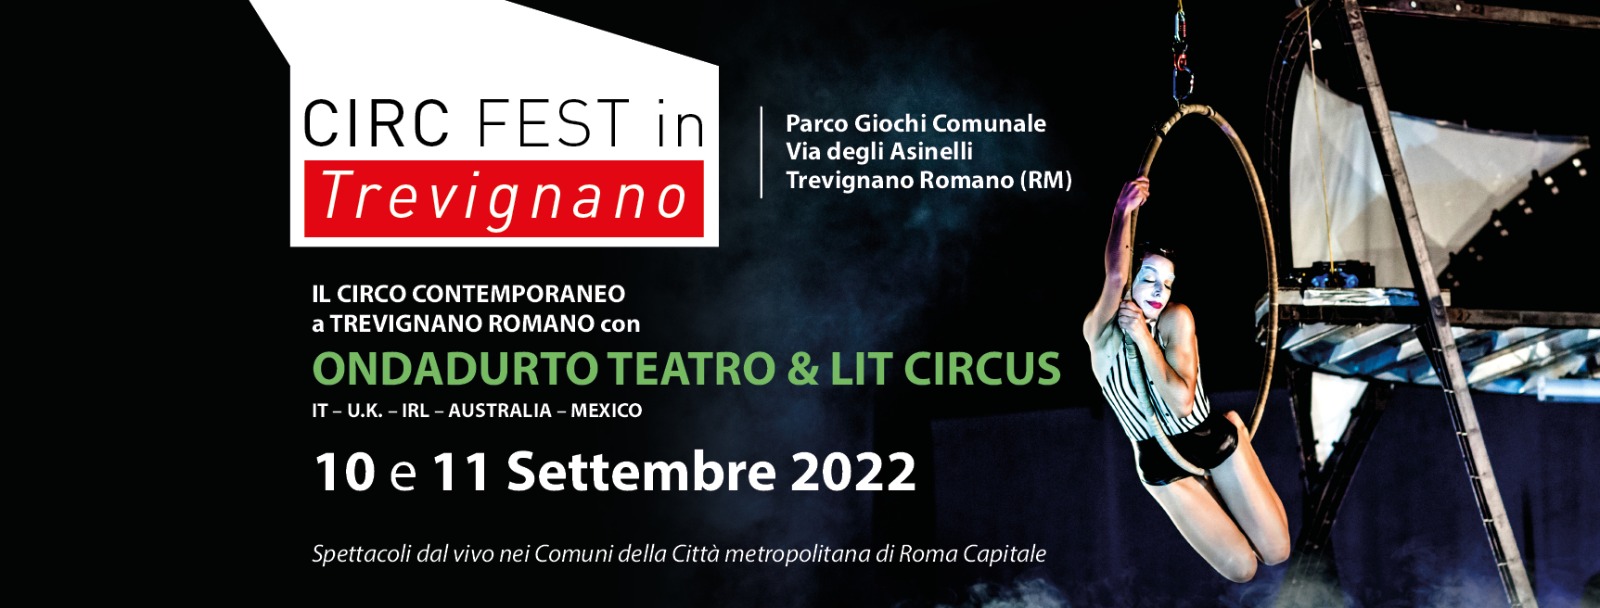 CIRC FEST in Trevignano